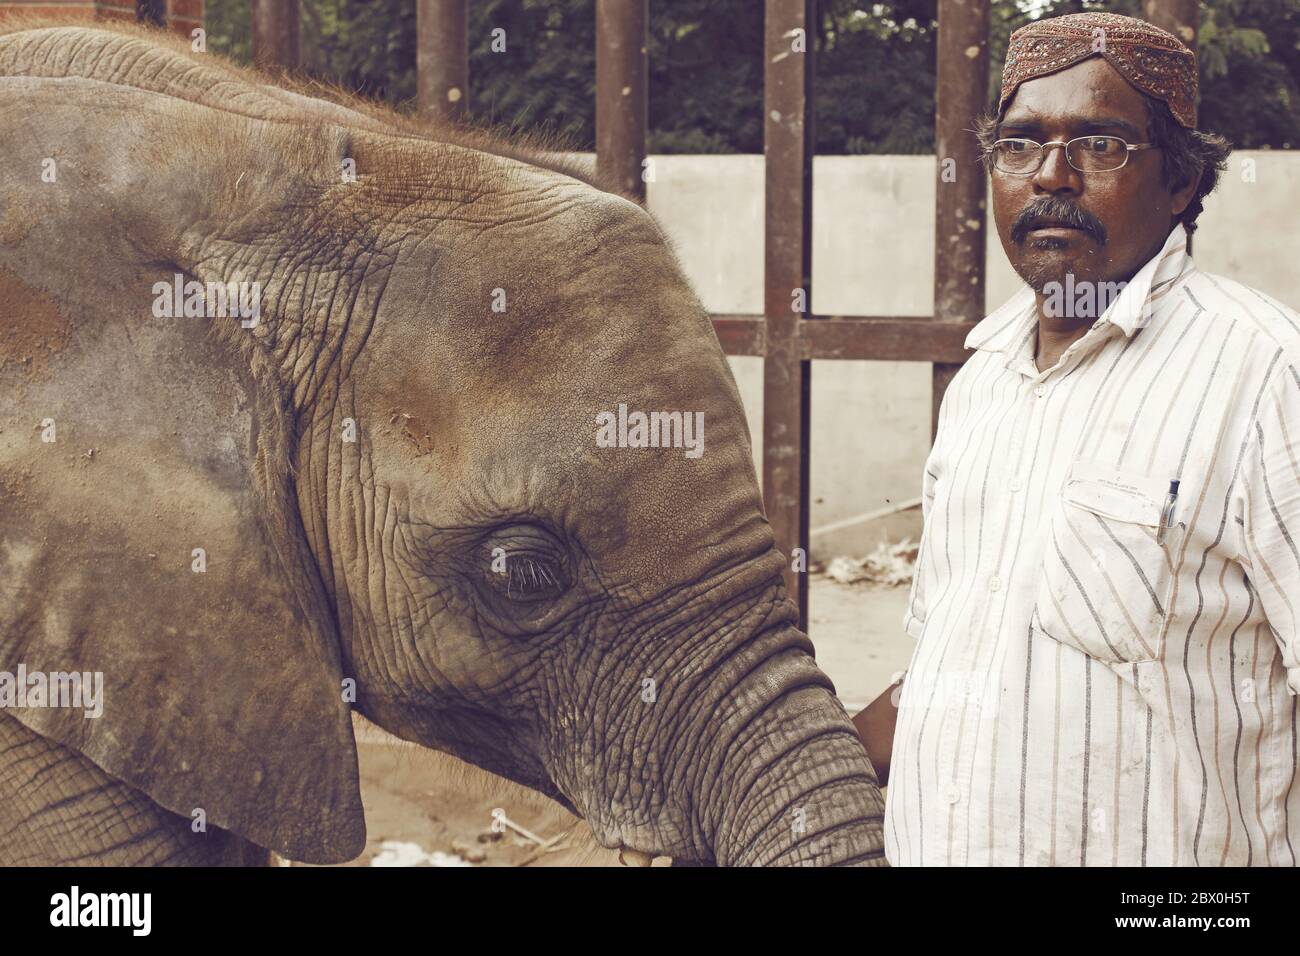 Elefante bambino allo Zoo di Karachi con custode, Karachi, Pakistan 26-06-2012 Foto Stock